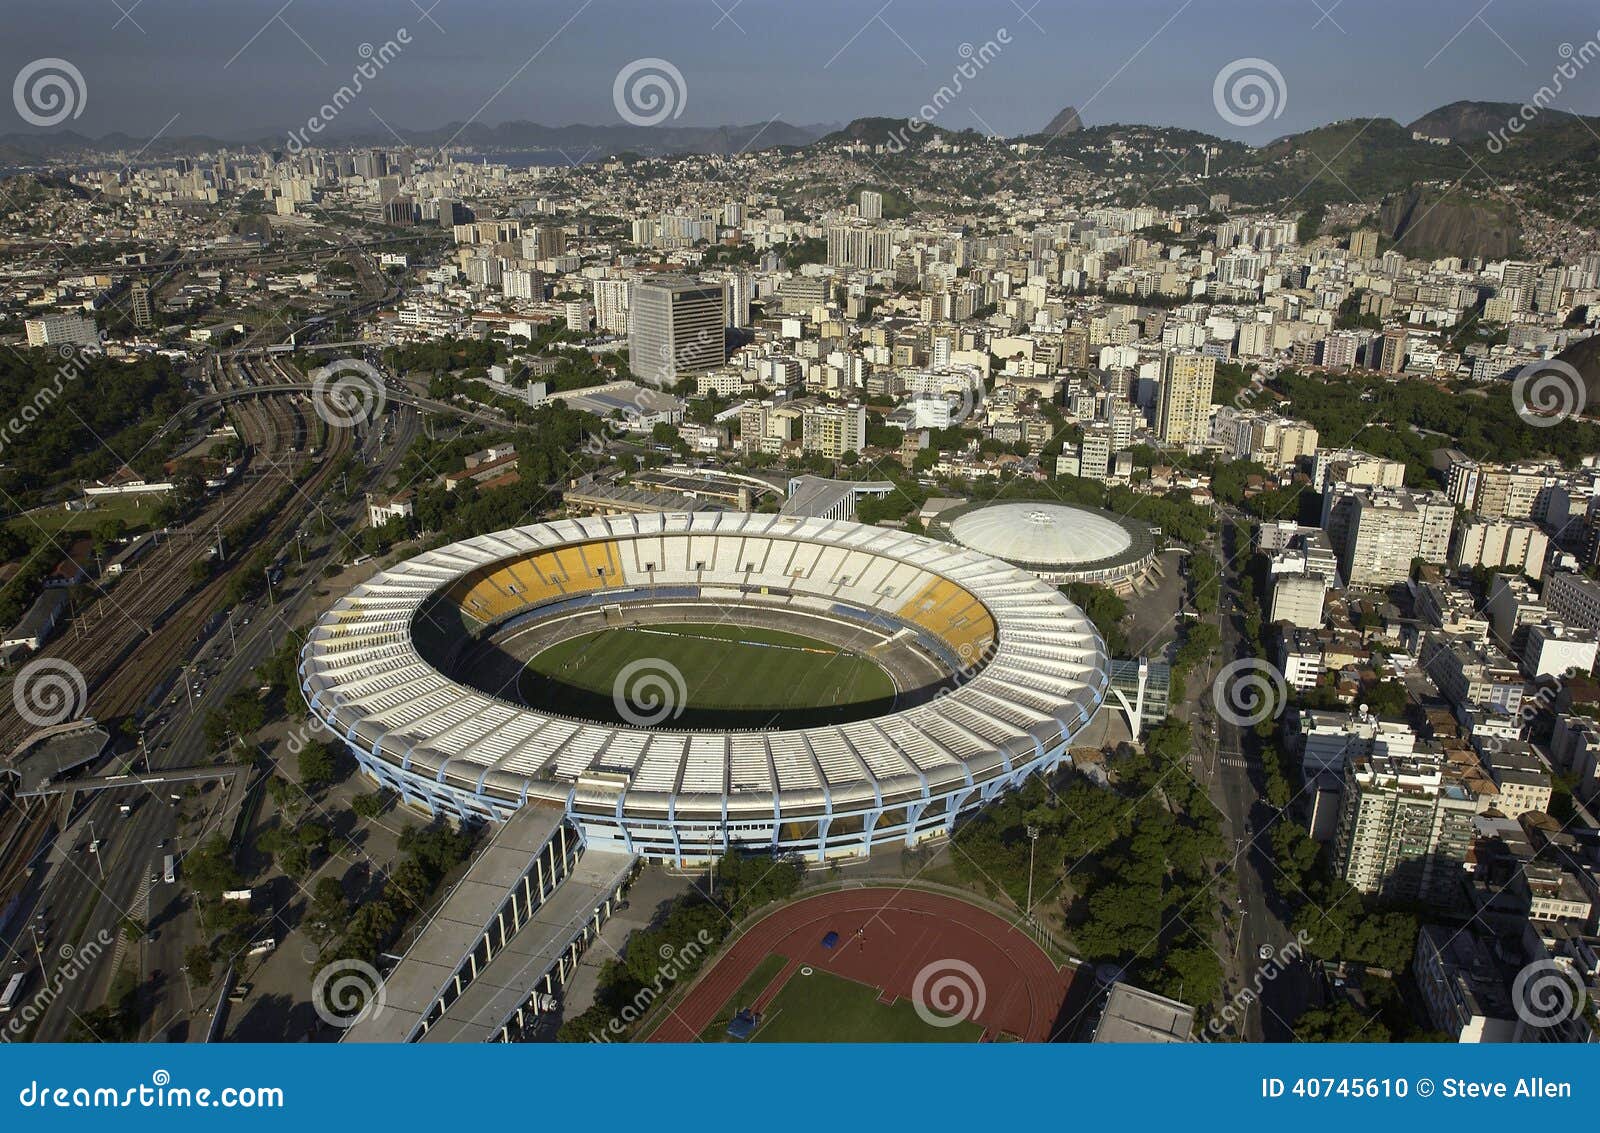 estadio do maracana - maracana stadium - rio de janeiro - brazil